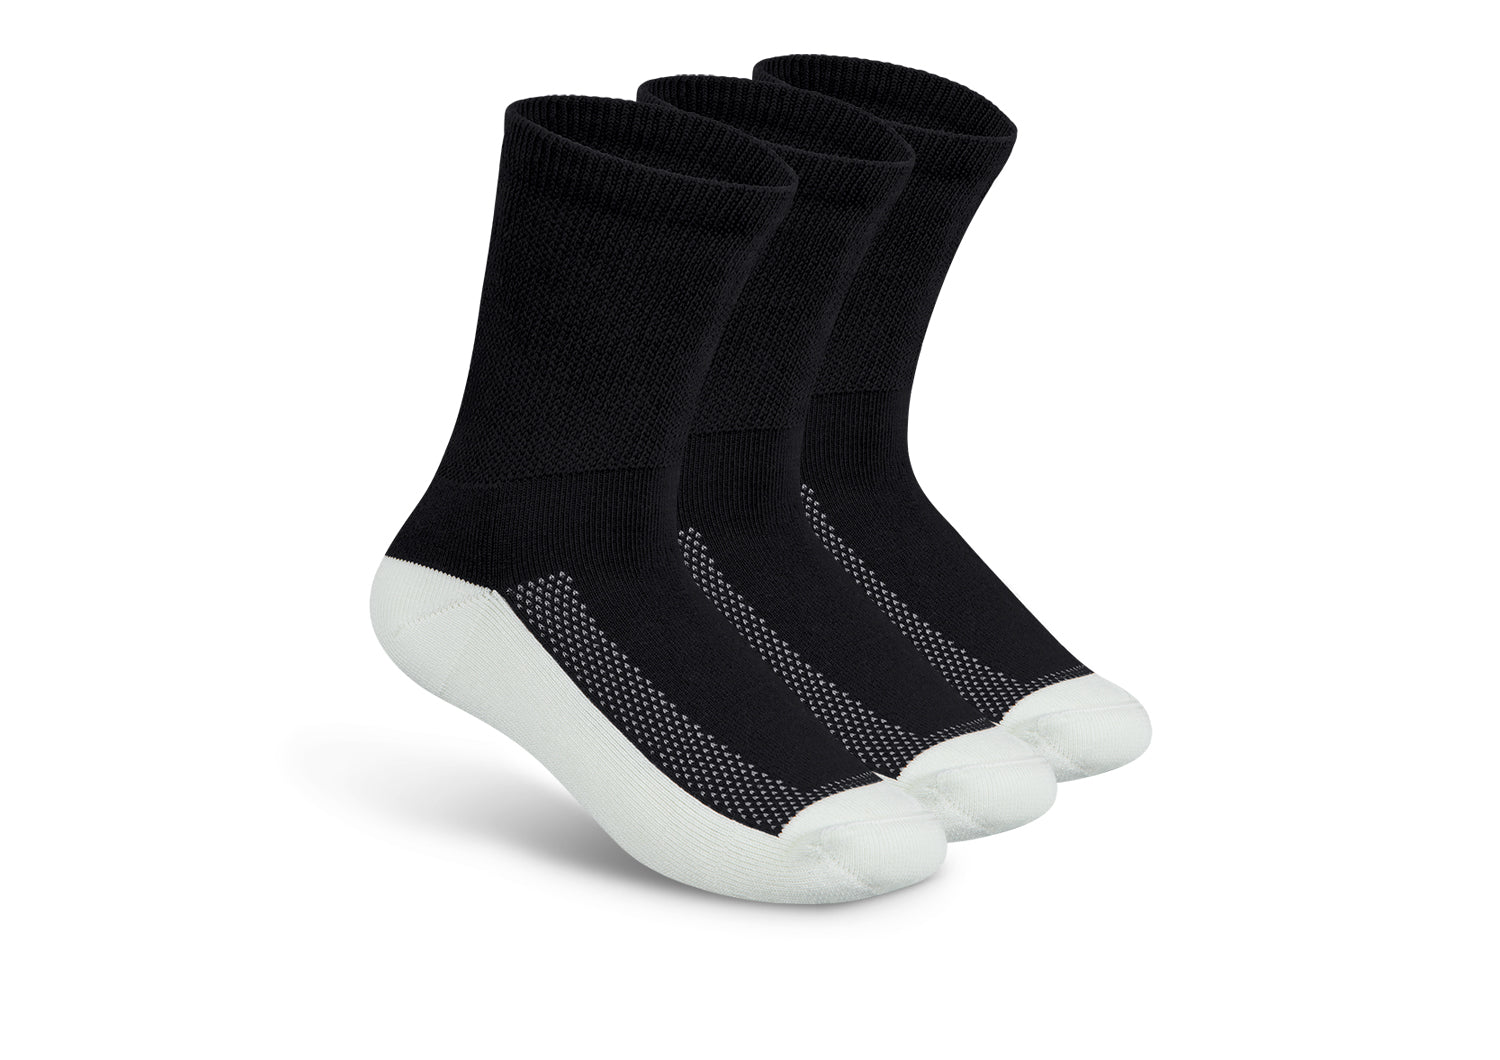 Padded Sole Diabetic Socks - Black